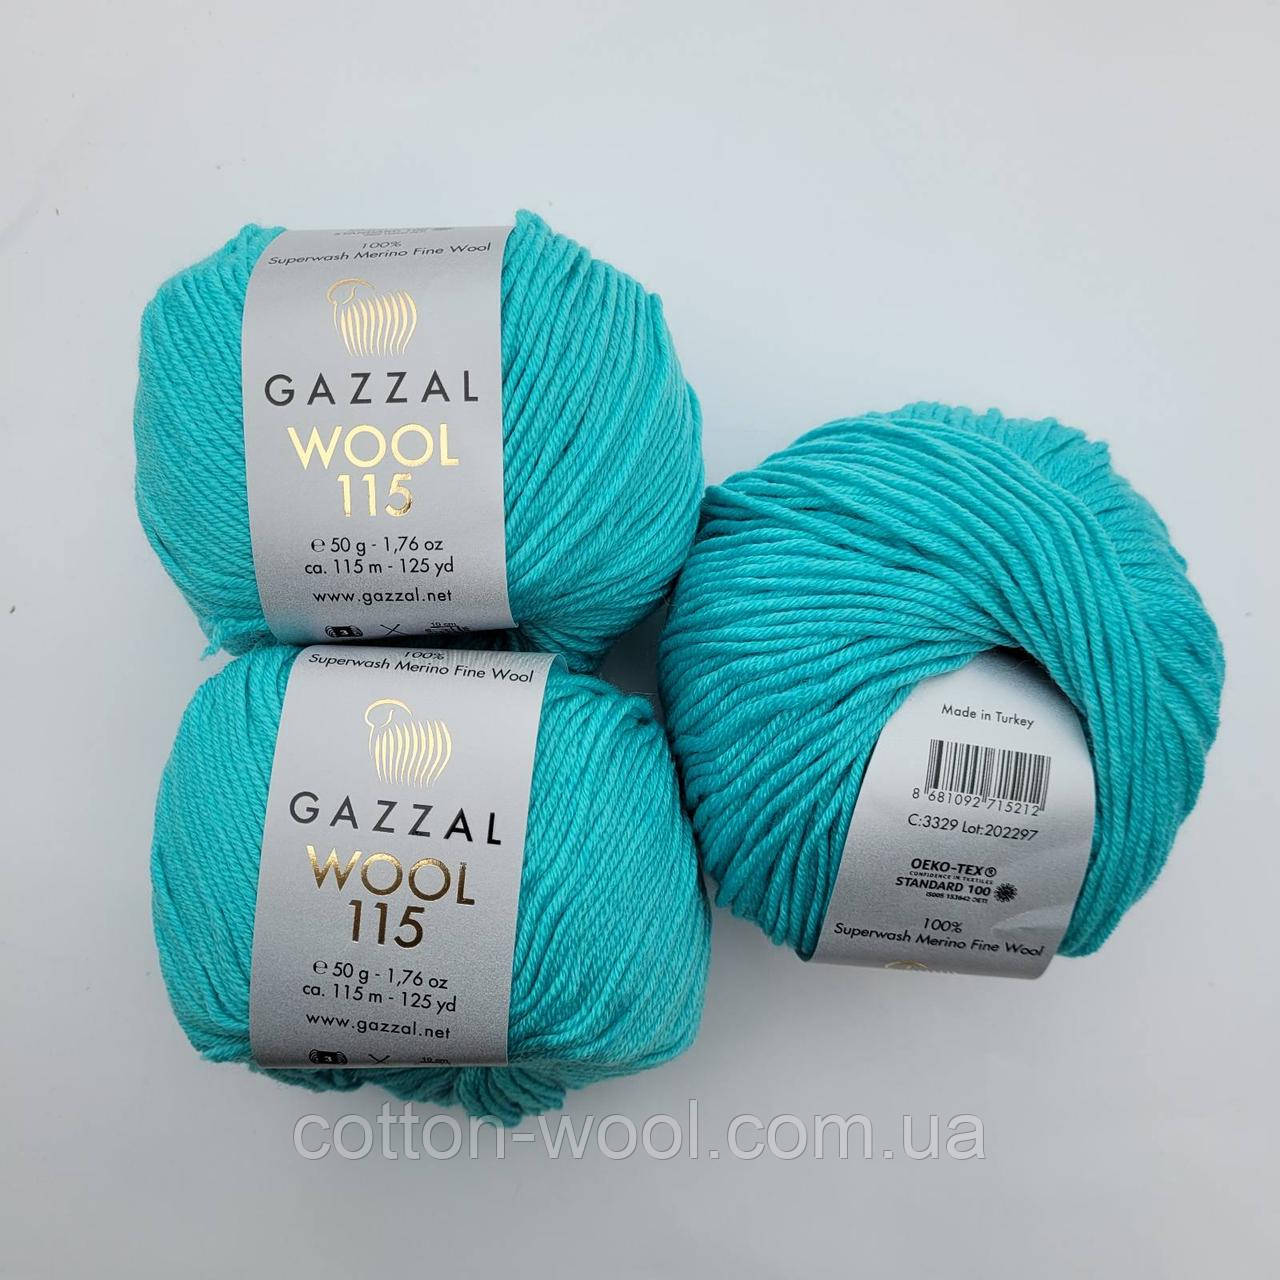 Gazzal Wool 115 (Газал Вул 115) 3329 100% Superwash Merino Fine Wool